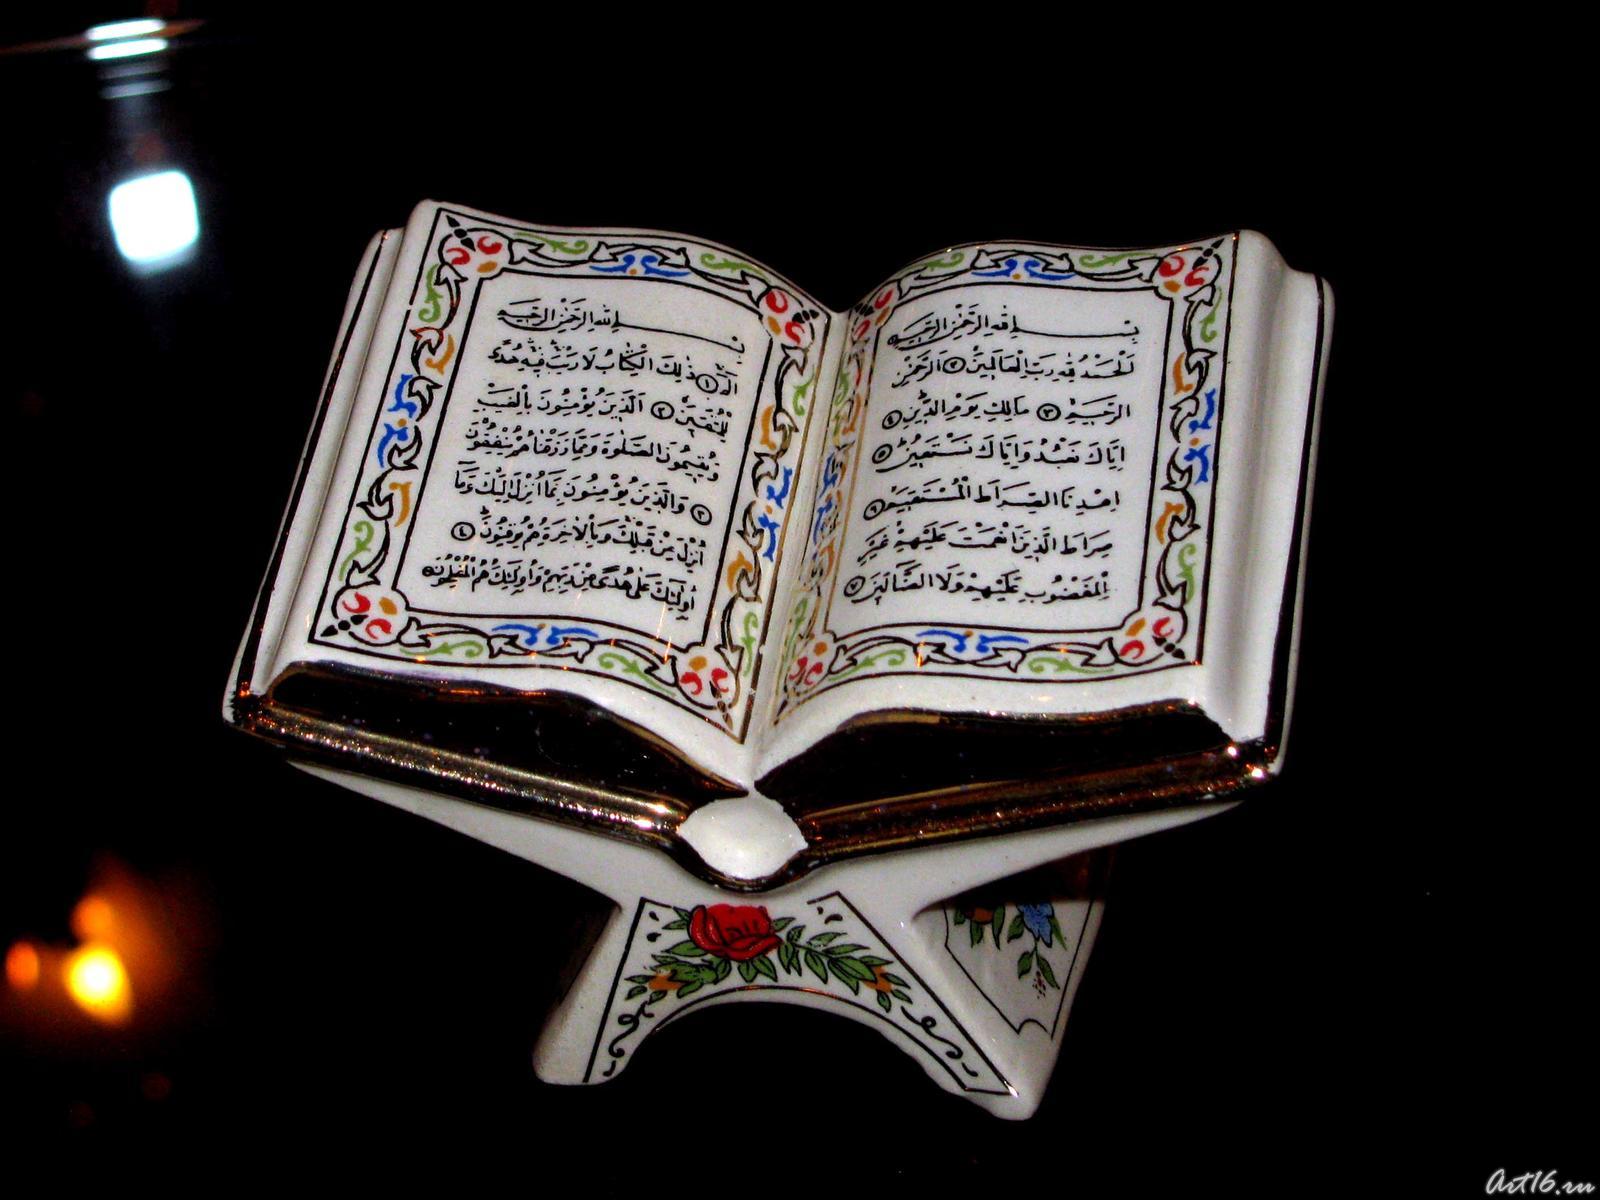 Quron kitob. Коран в открытом виде. Книга "Коран".